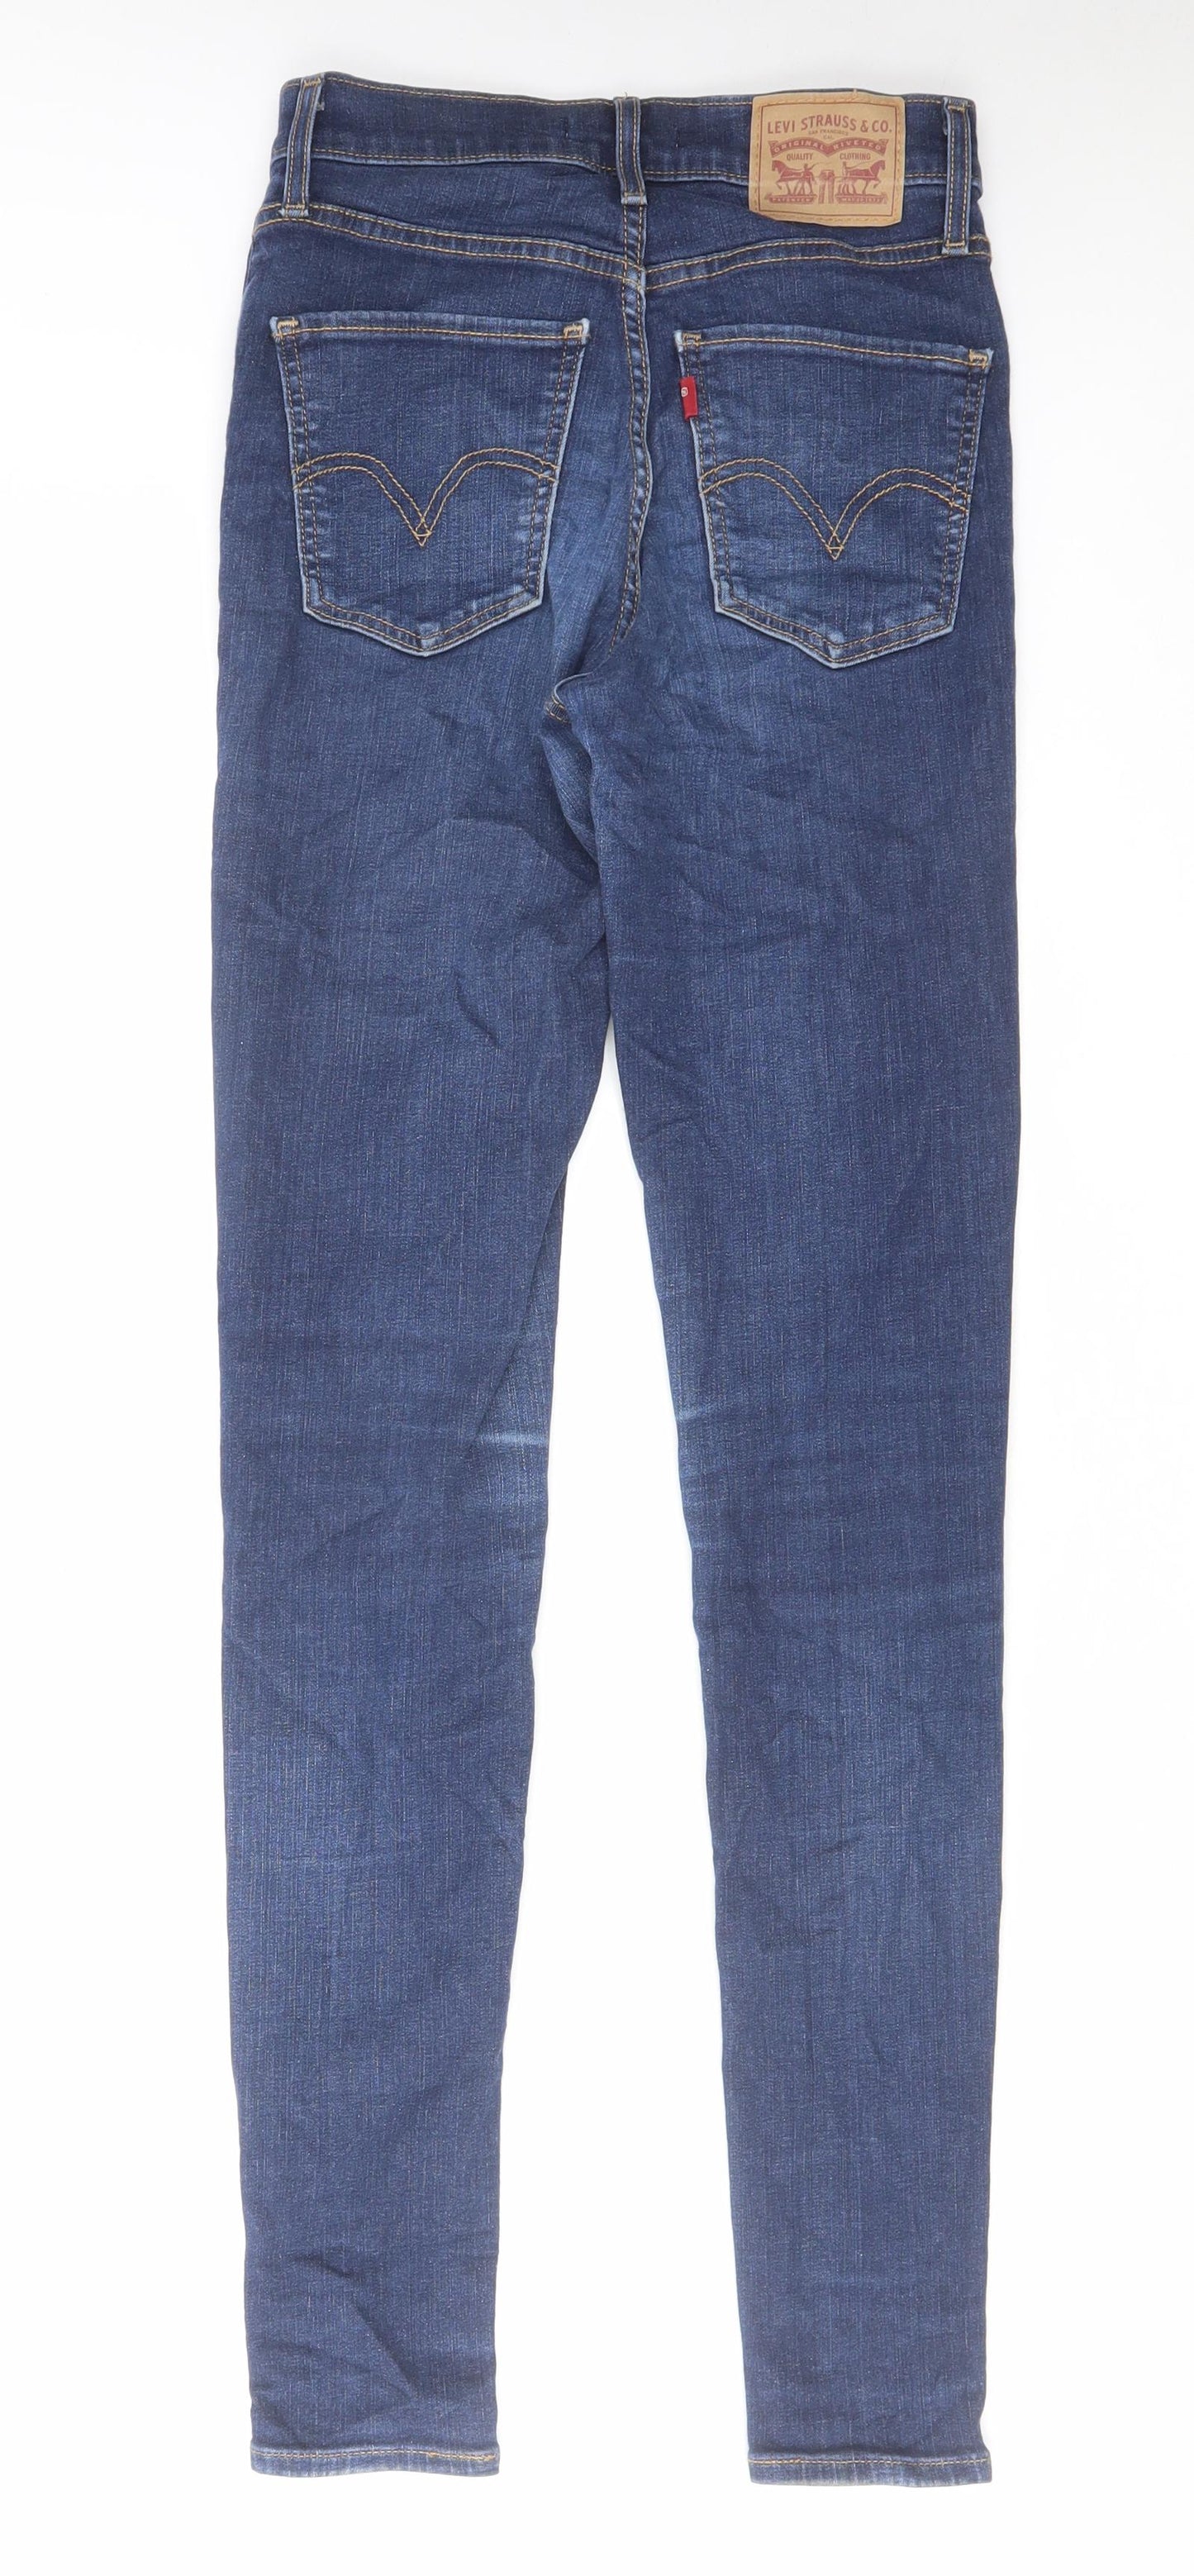 Levi's Womens Blue Cotton Skinny Jeans Size 26 in L31 in Regular Zip